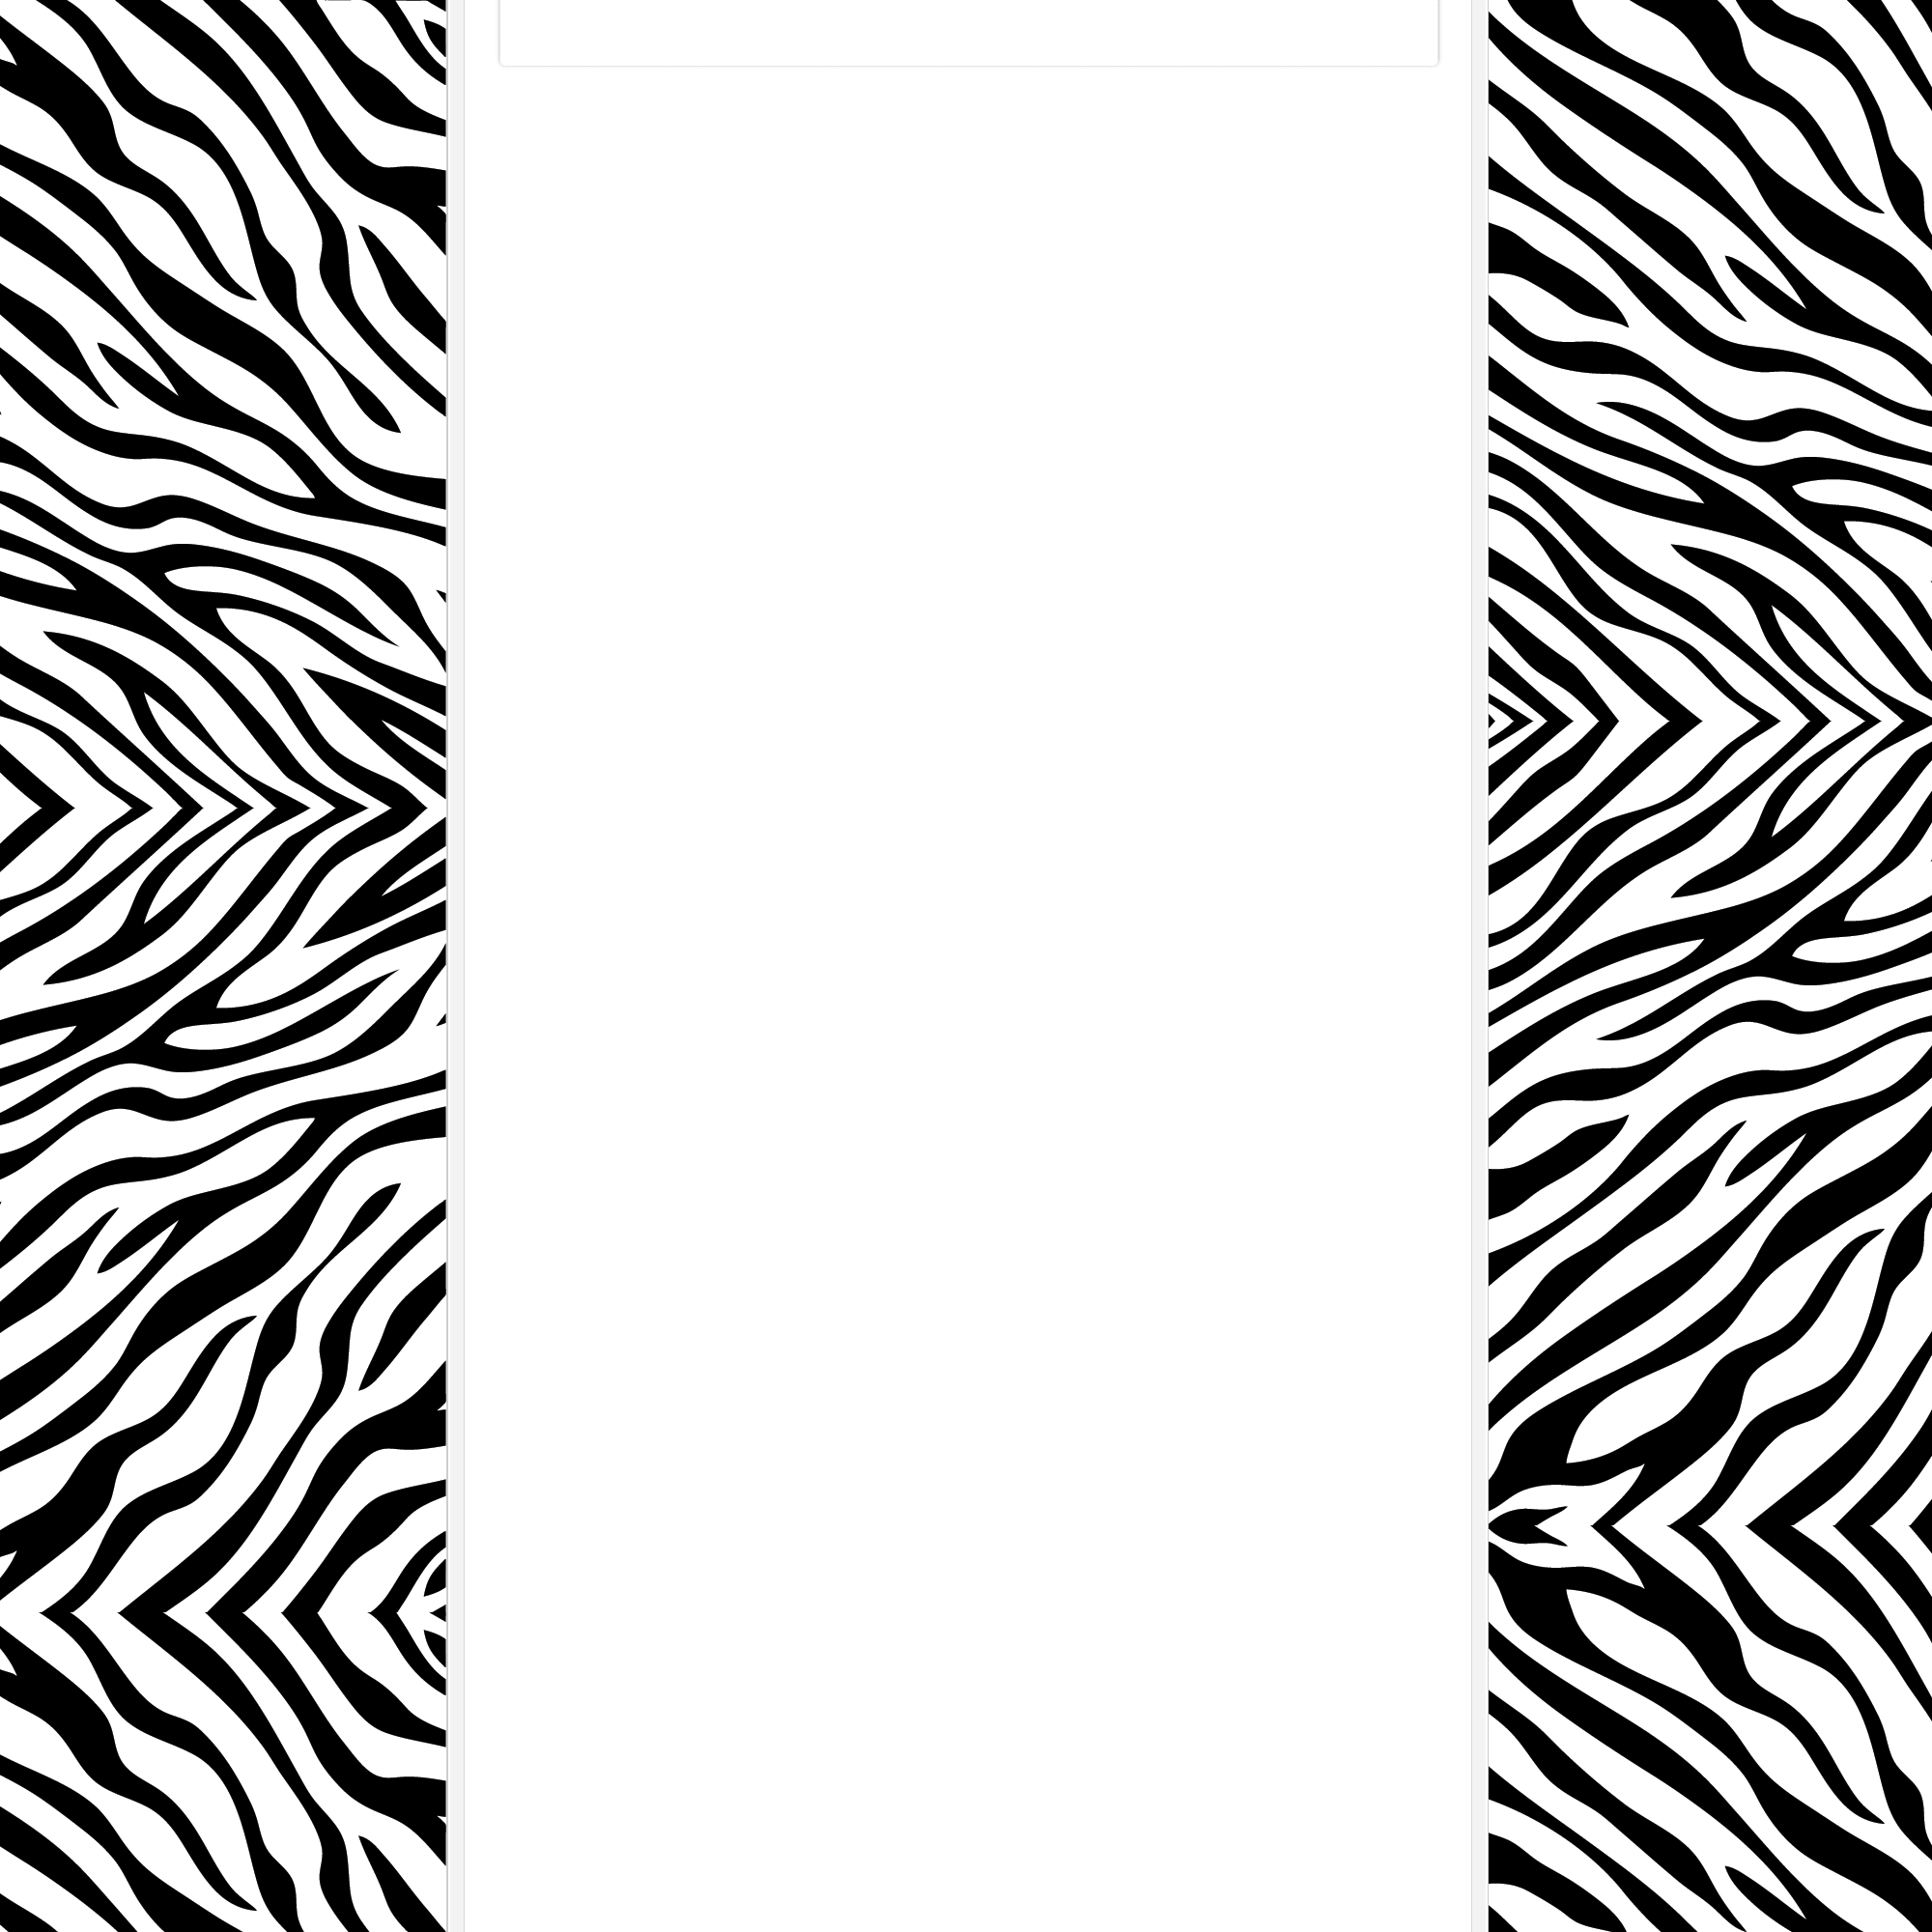 Zebra Print Border Clip Art - ClipArt Best